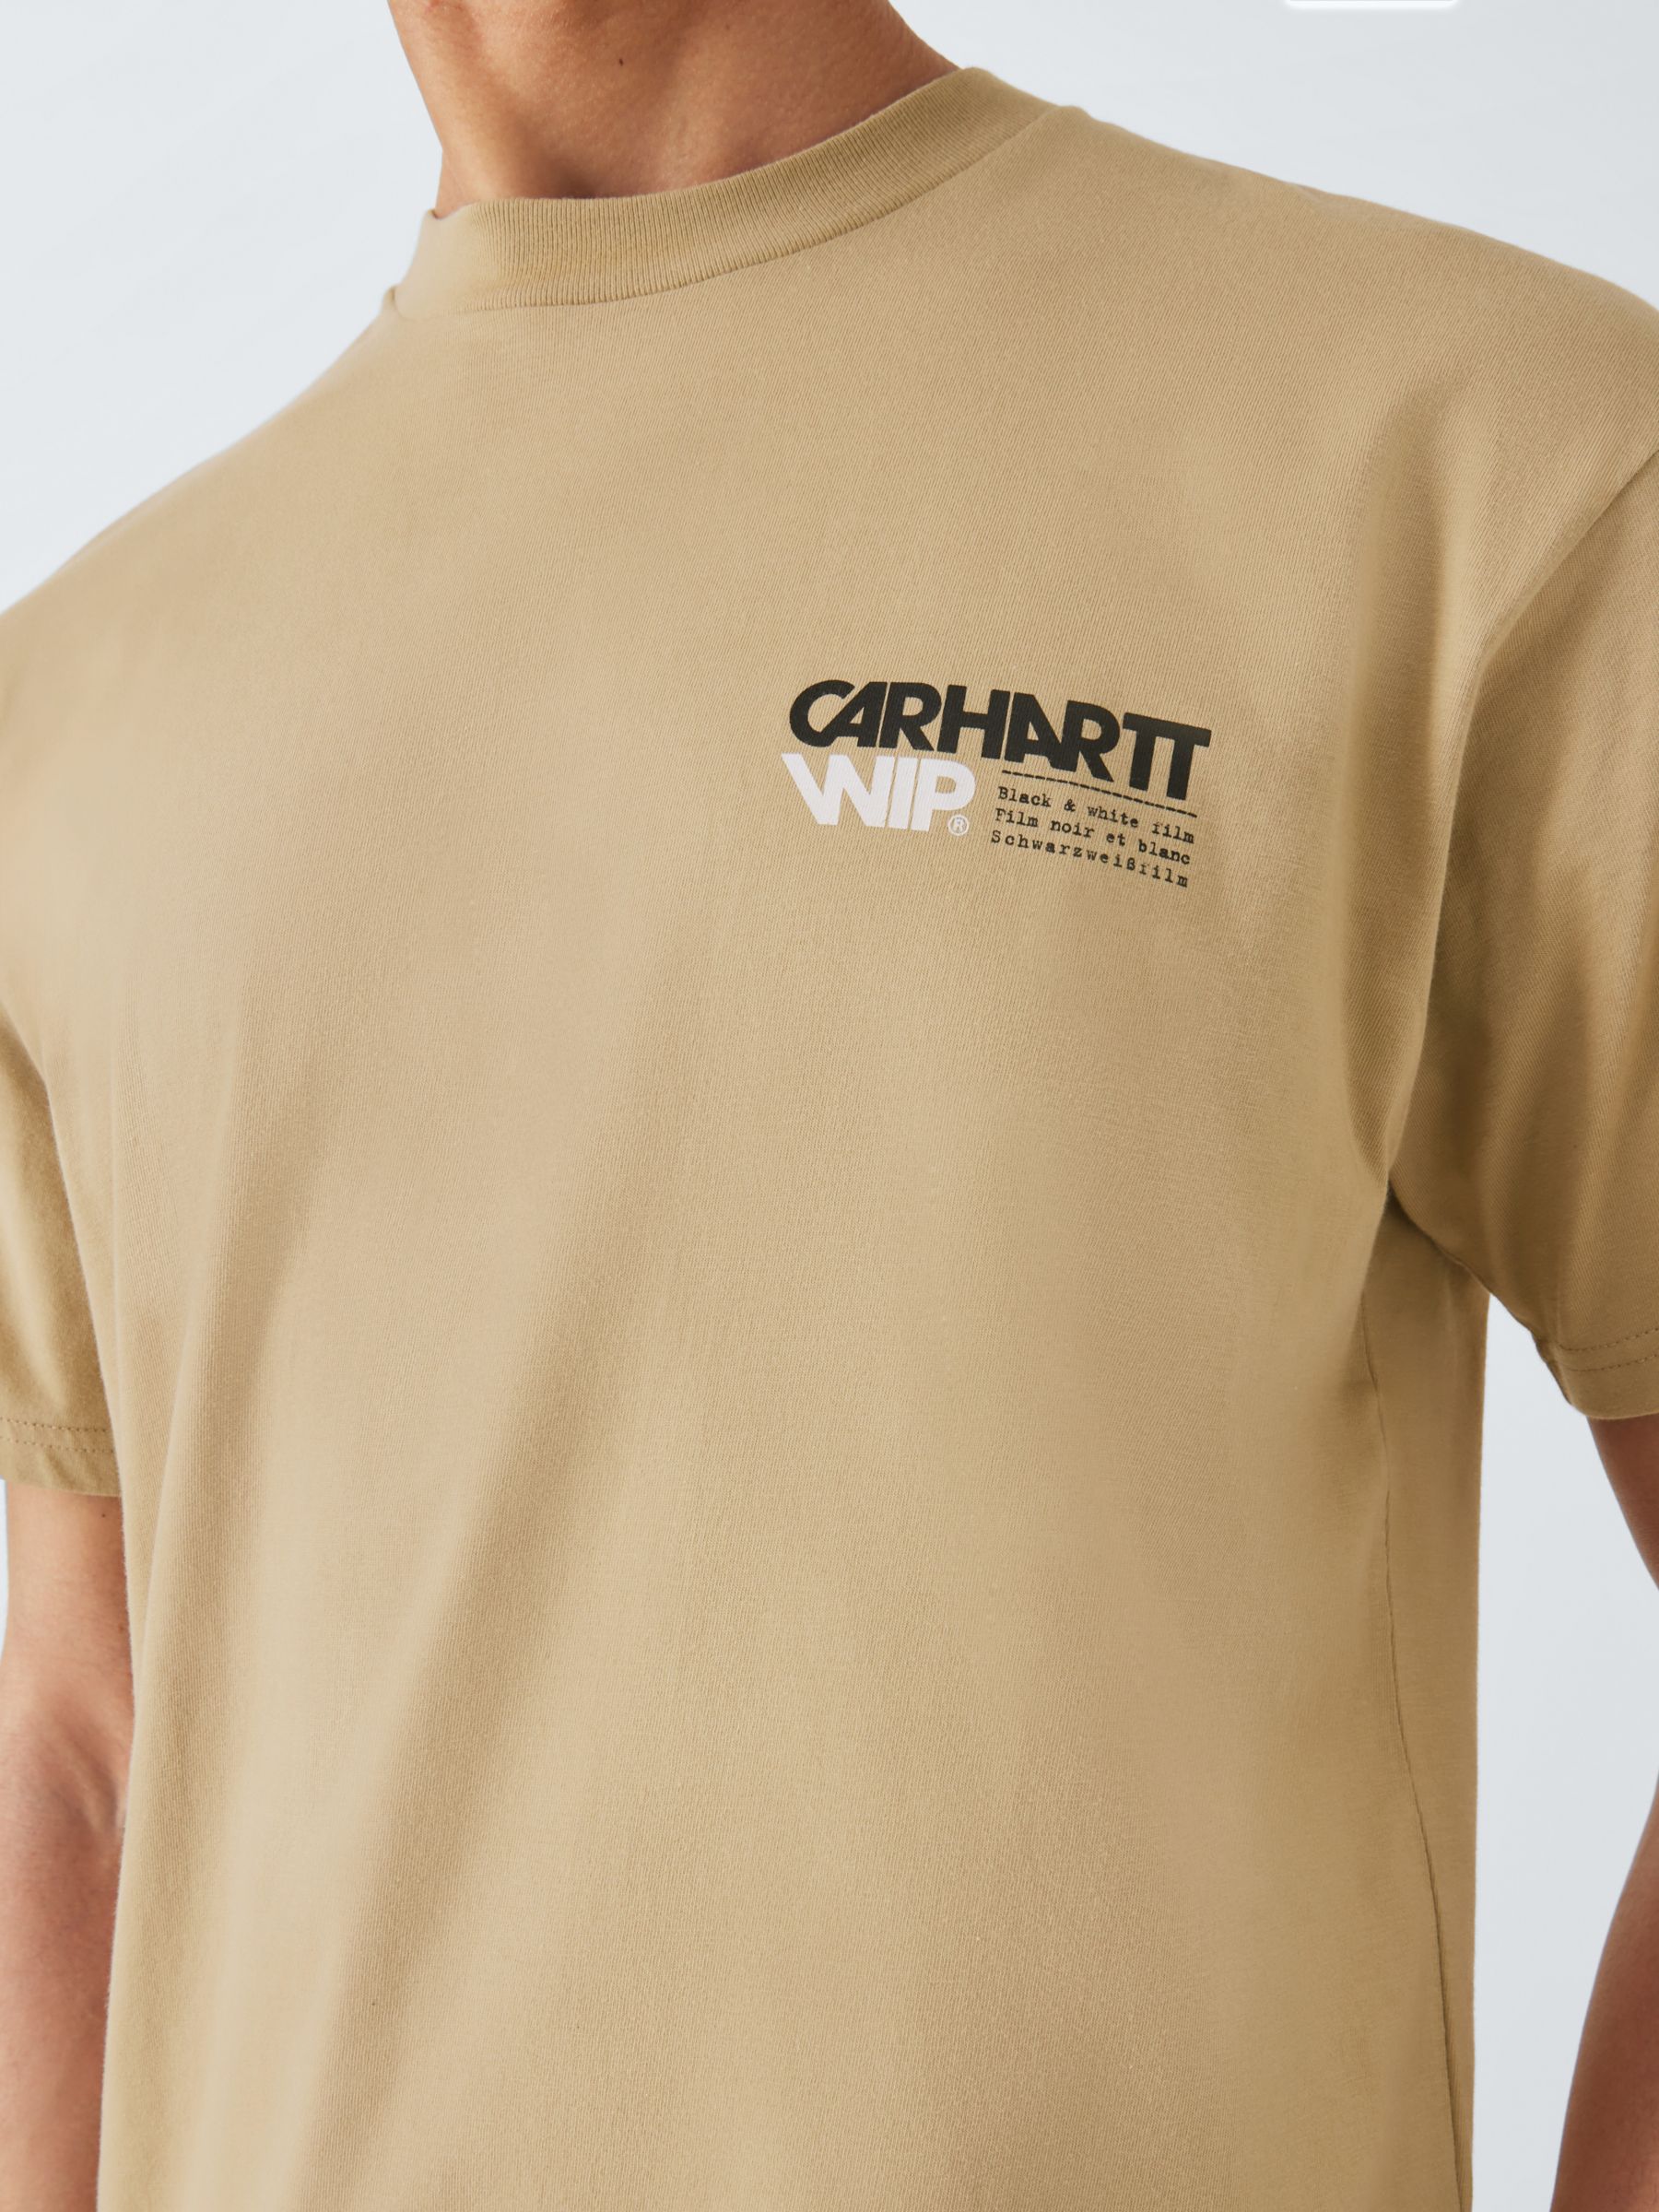 Carhartt WIP Contact Organic Cotton Short Sleeve T-Shirt, Sable, S